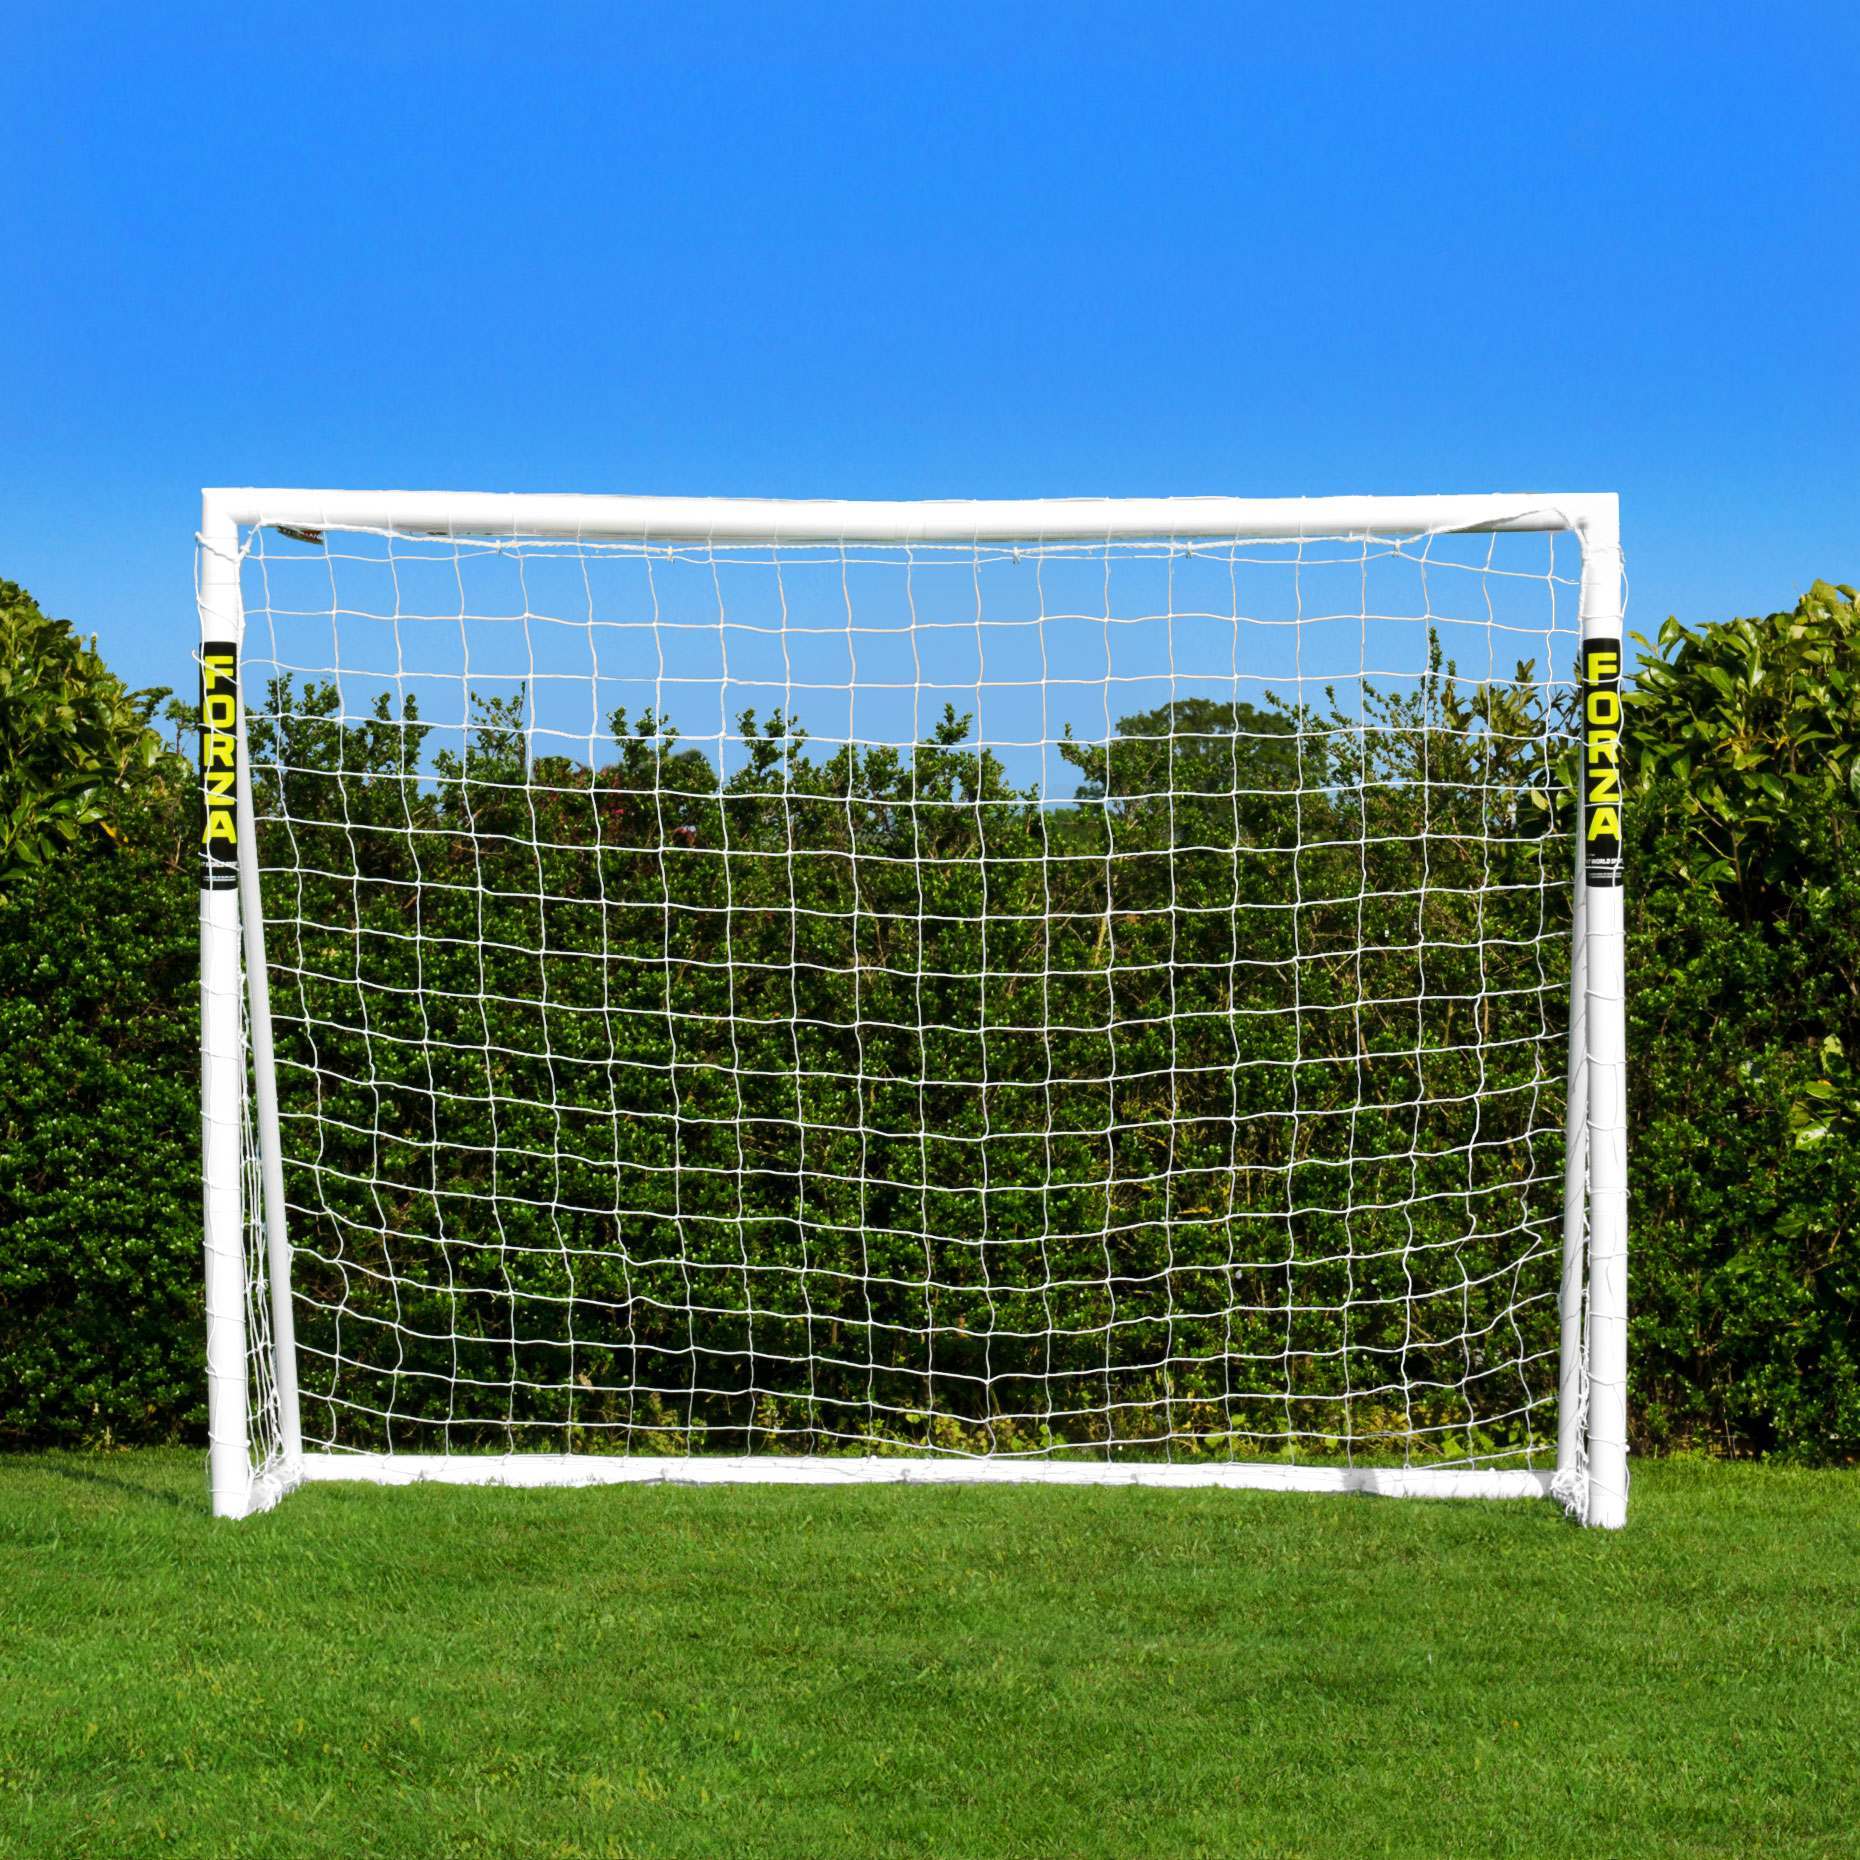 8 x 6 FORZA Soccer Goal Post | Net World Sports USA